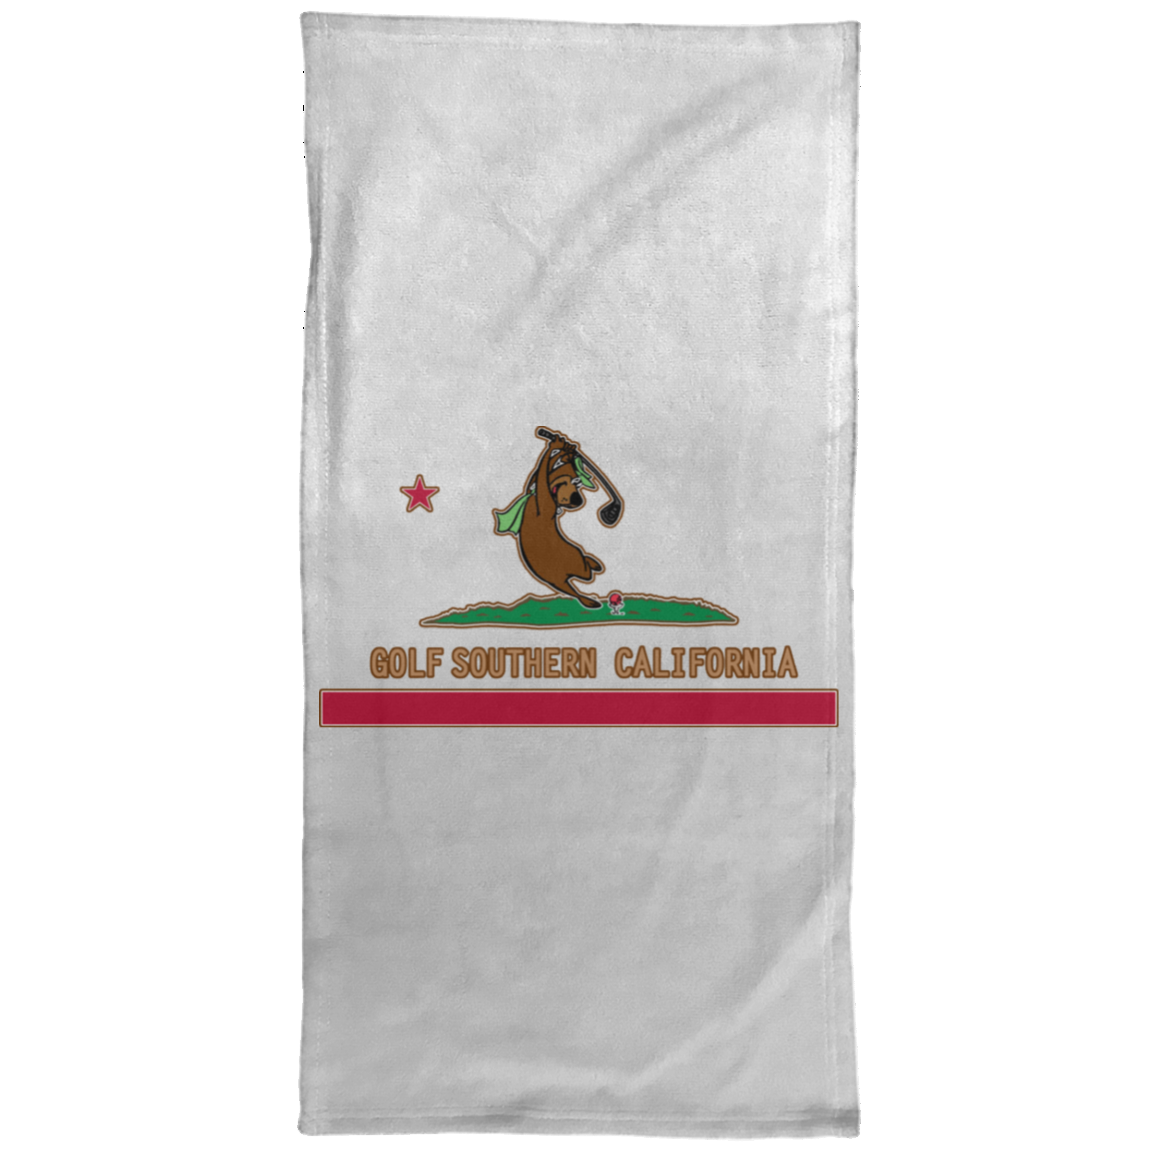 OPG Custom Design #9. Golf Southern California. California State Flag / Yogi Bear Playing Golf Parody. Hand Towel - 15x30